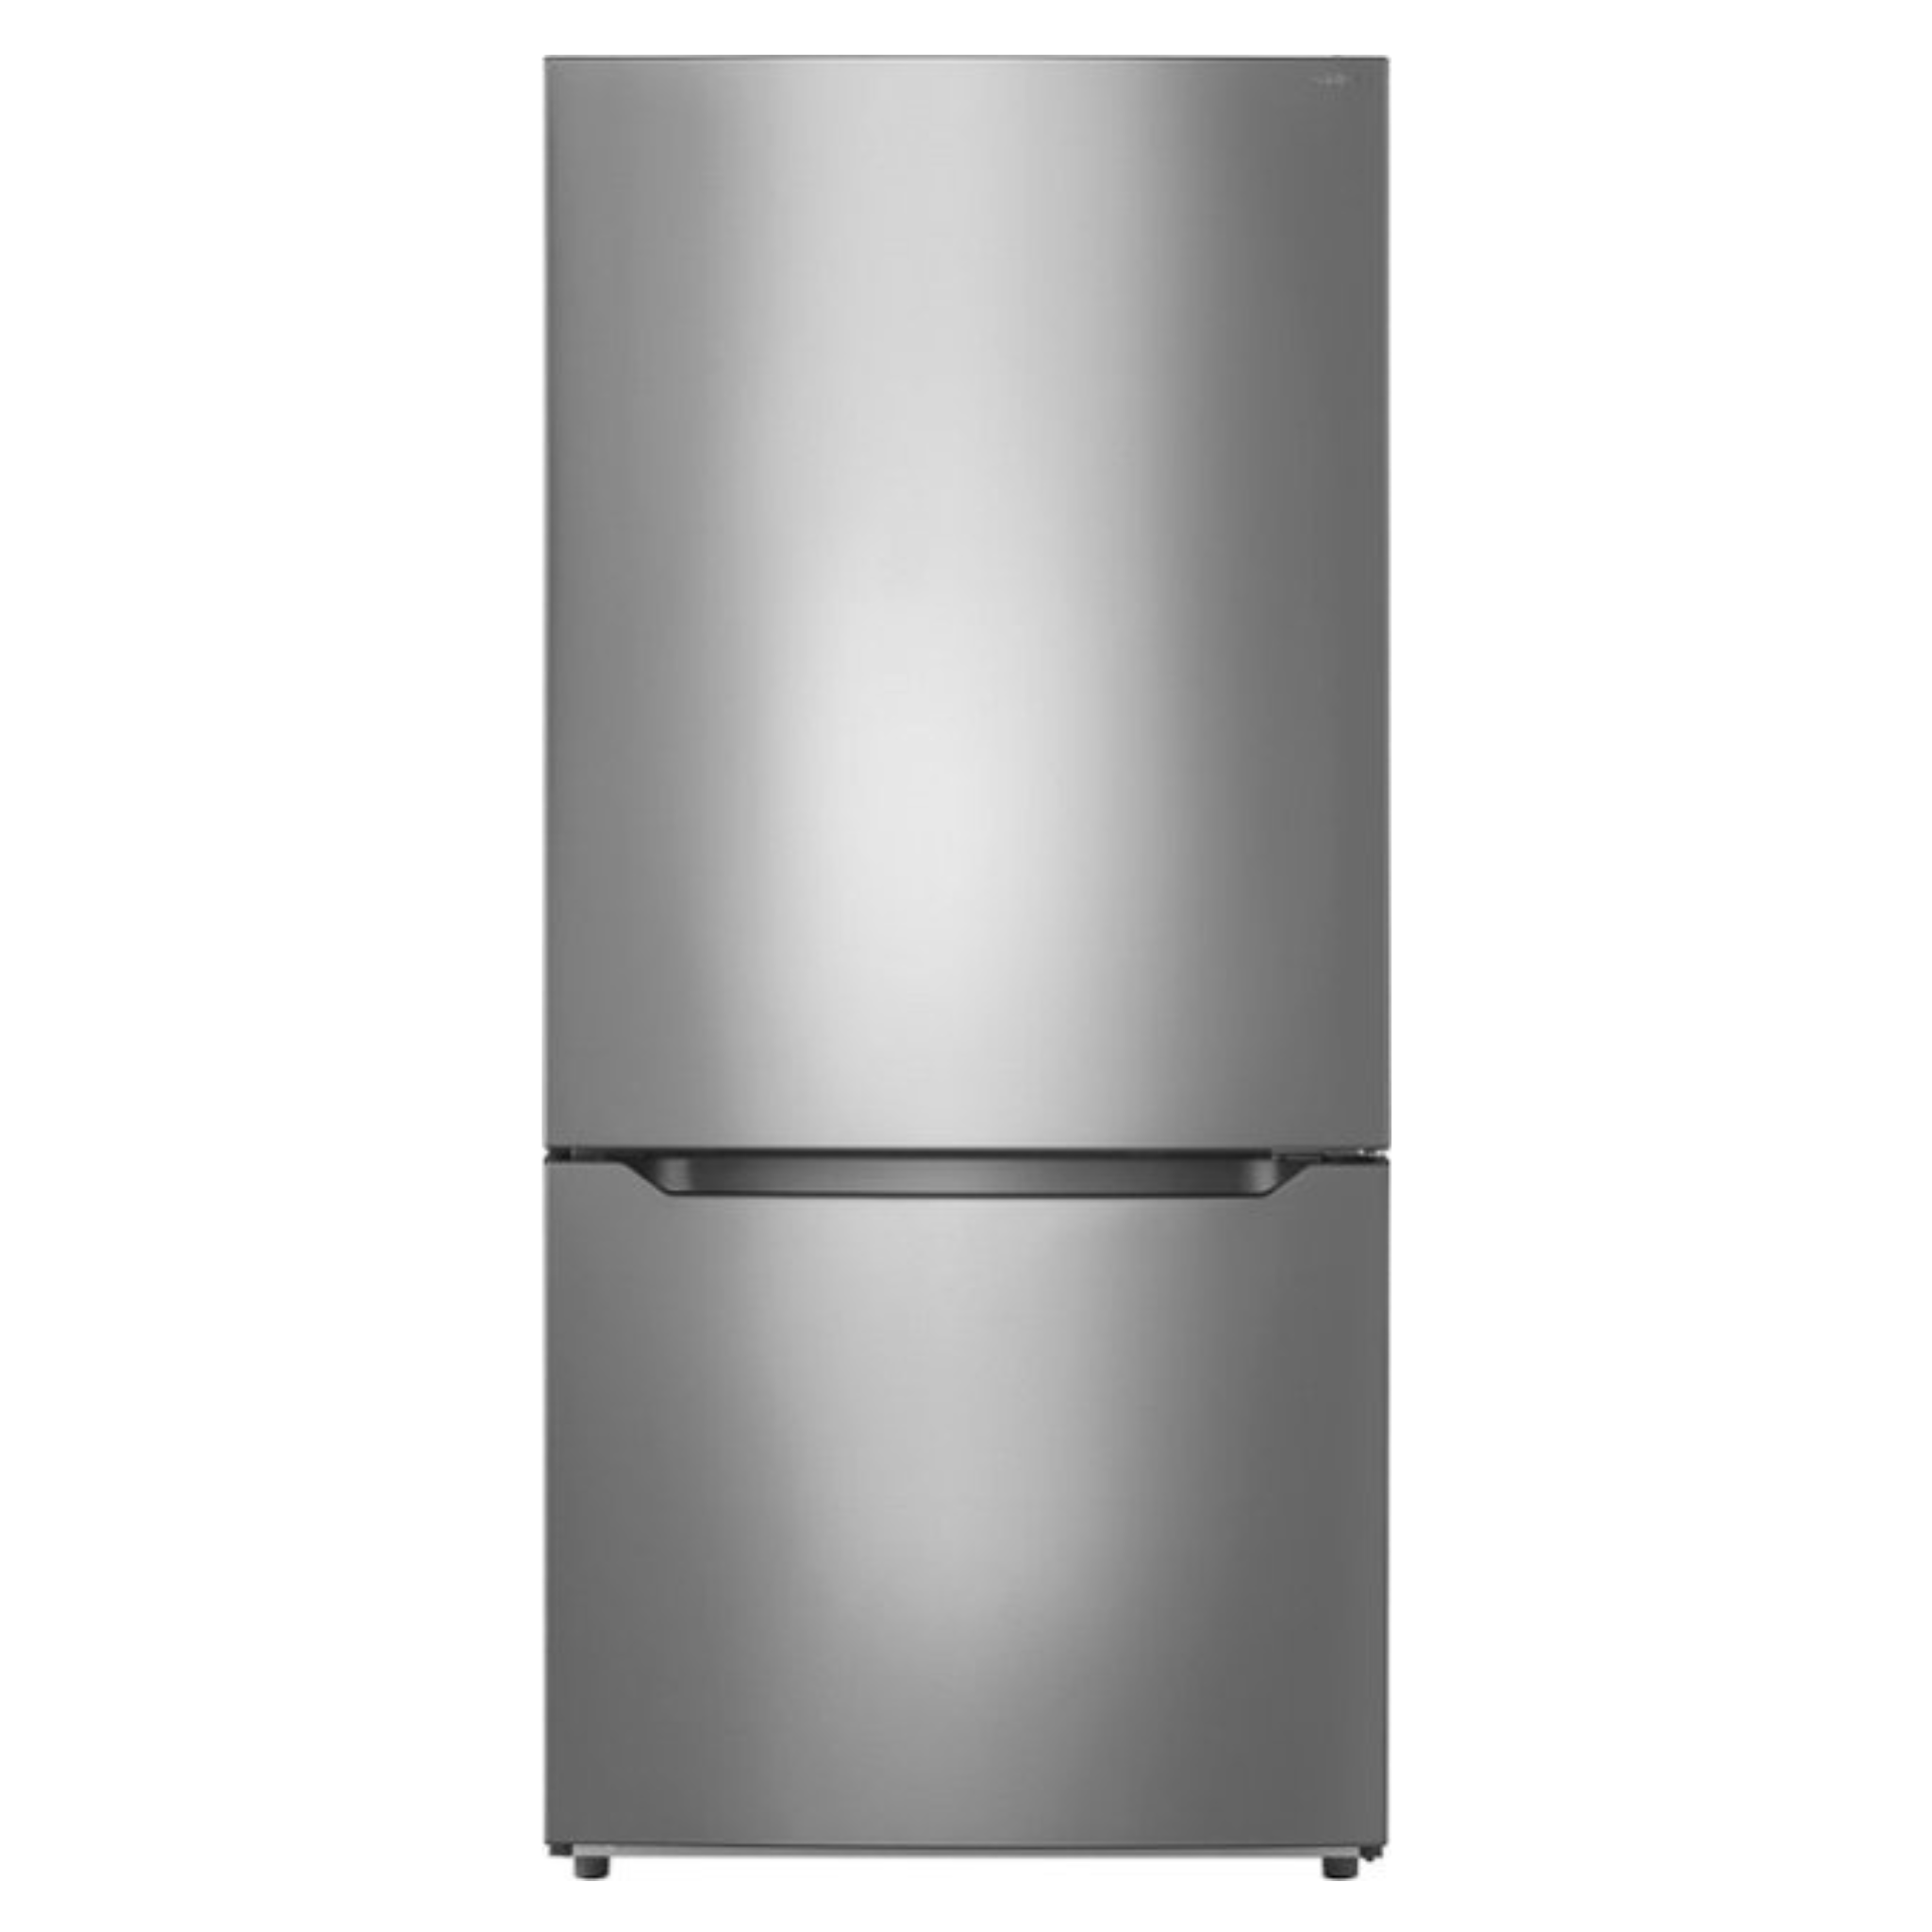 Insignia 18.6 Cu. Ft. Bottom Freezer Refrigerator (Stainless Steel)